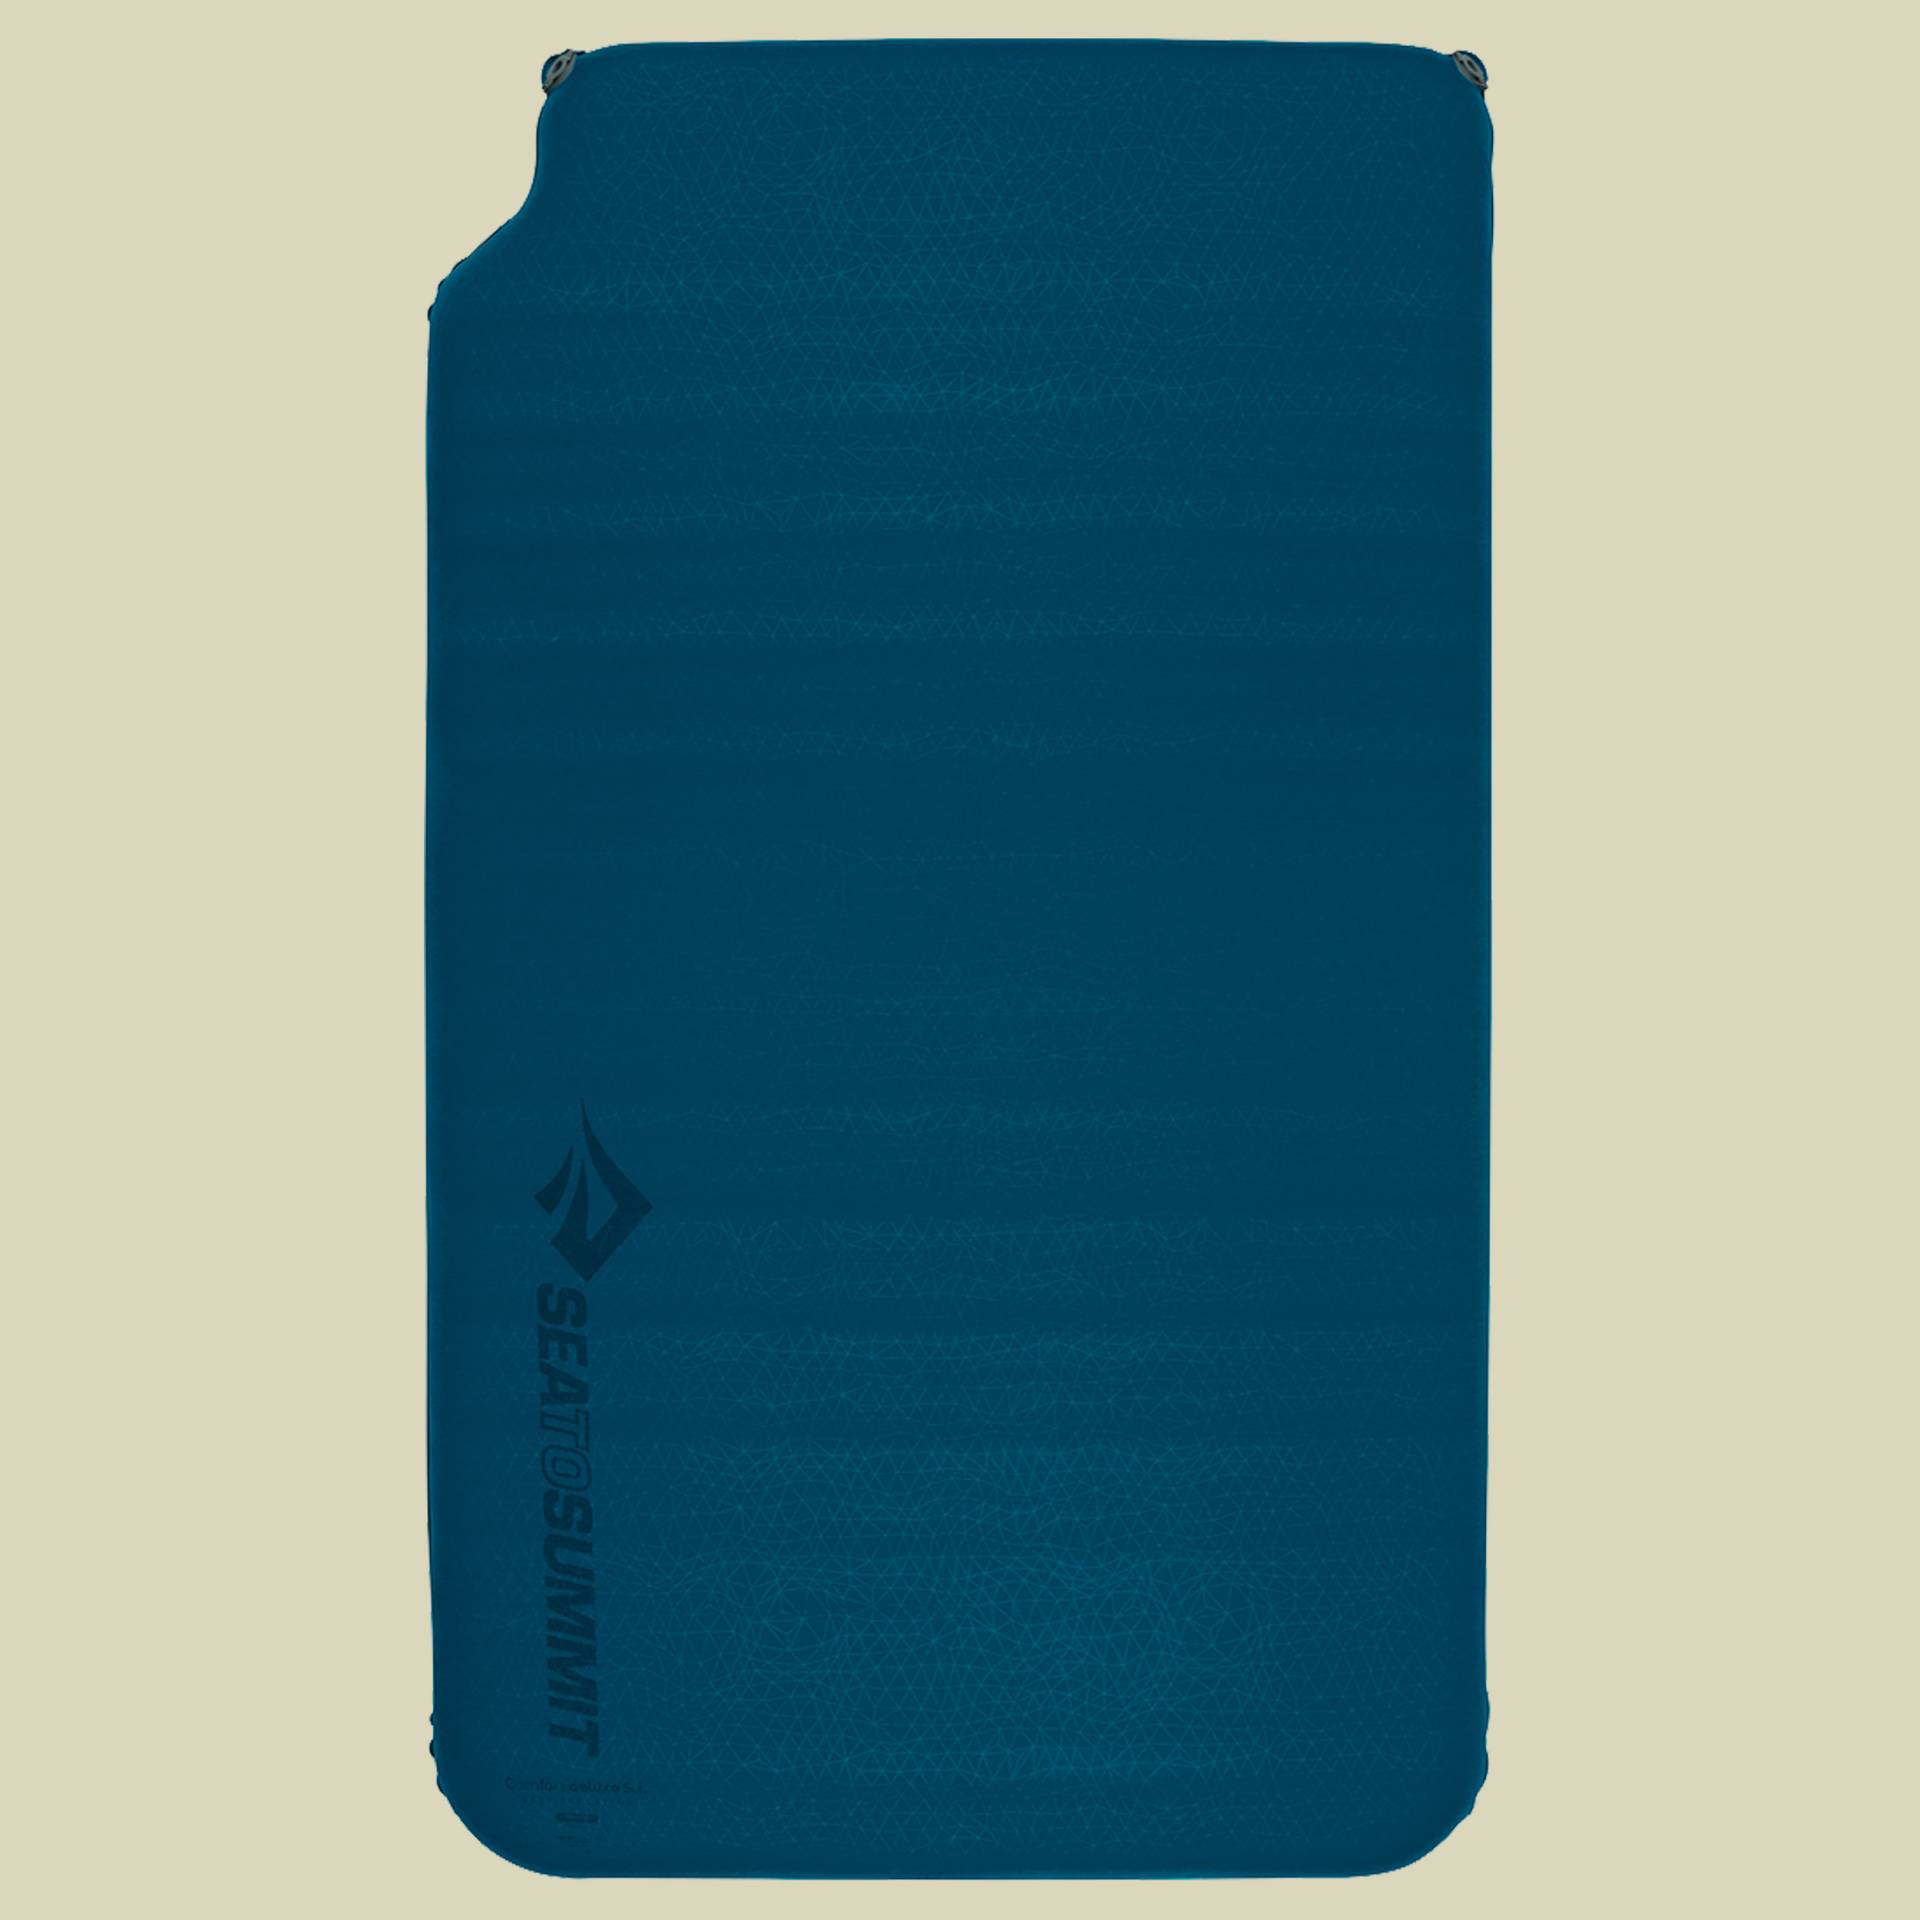 Comfort Deluxe S.I. Camper Van Maße: 201 x 115 cm Farbe: byron blue von Sea to Summit